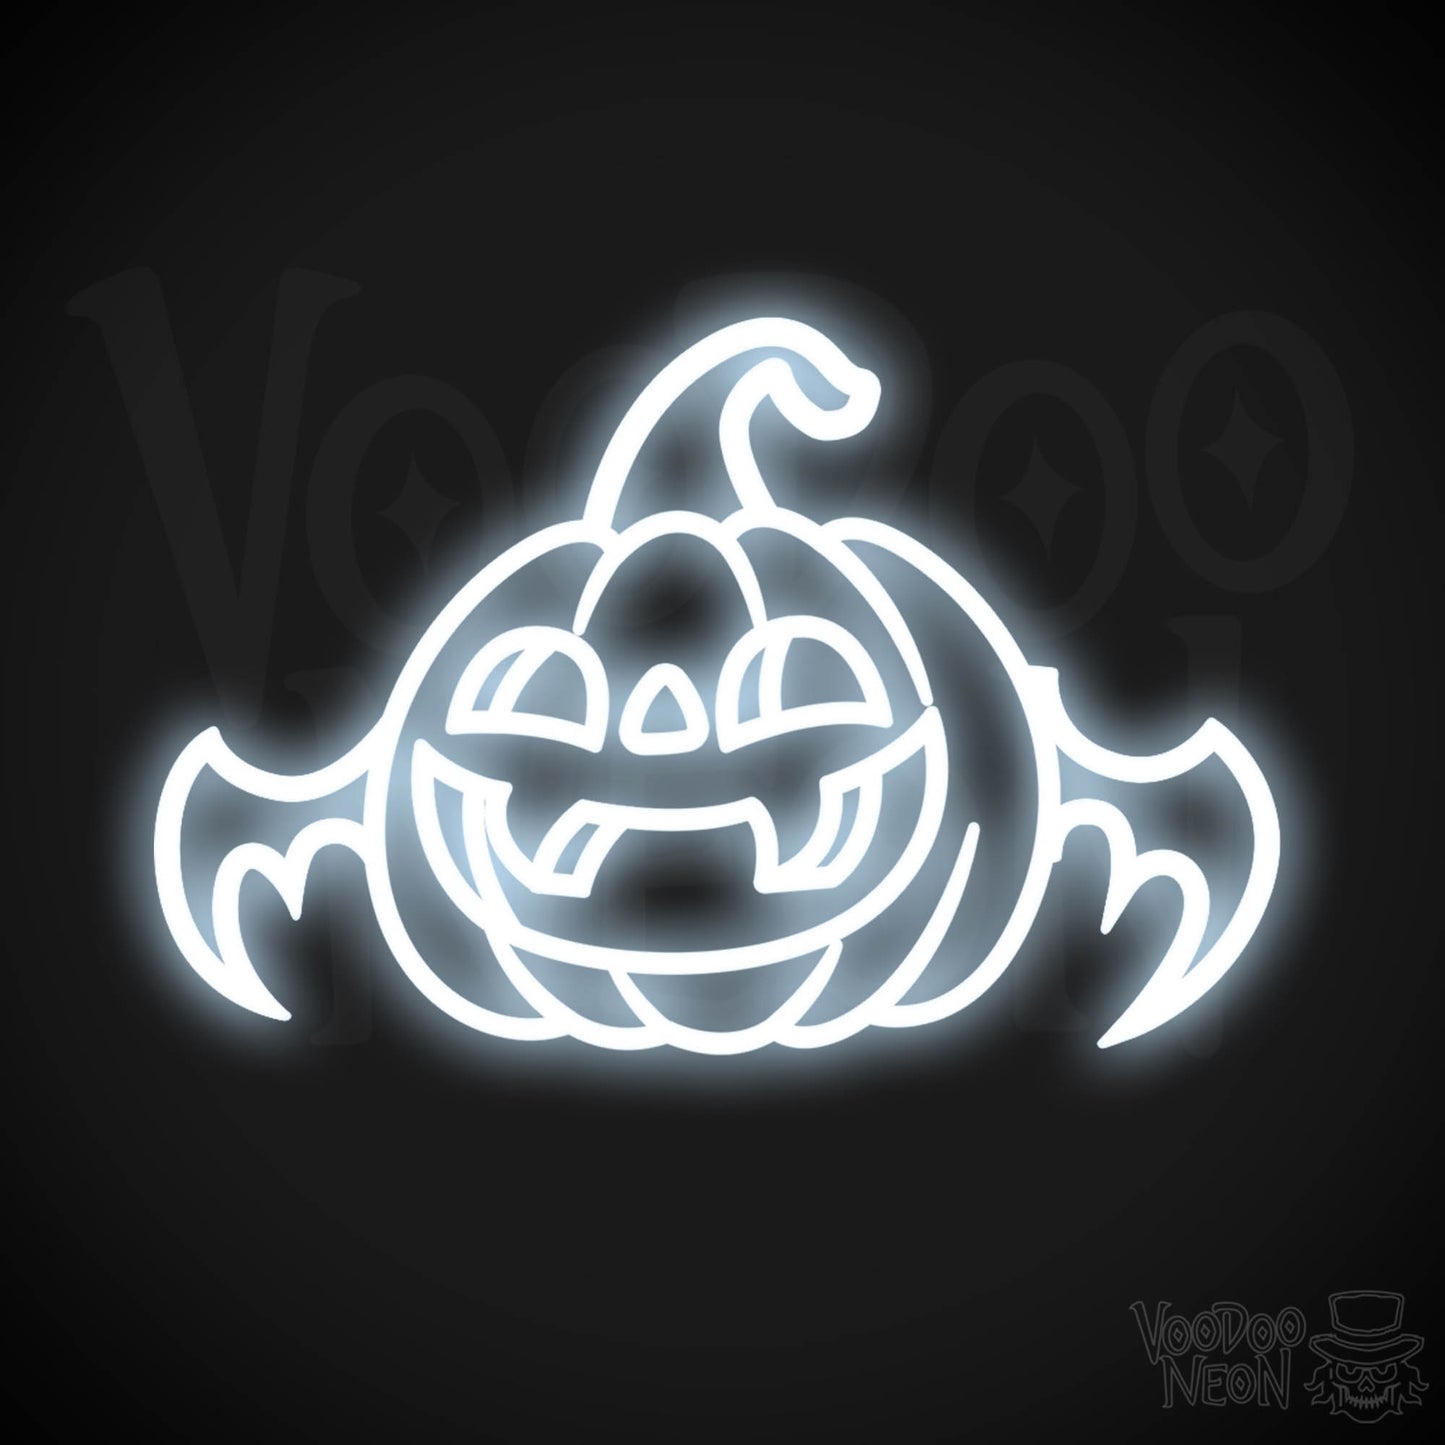 Neon Pumpkin Sign - Pumpkin Neon Sign - LED Halloween Artwork - Color Cool White